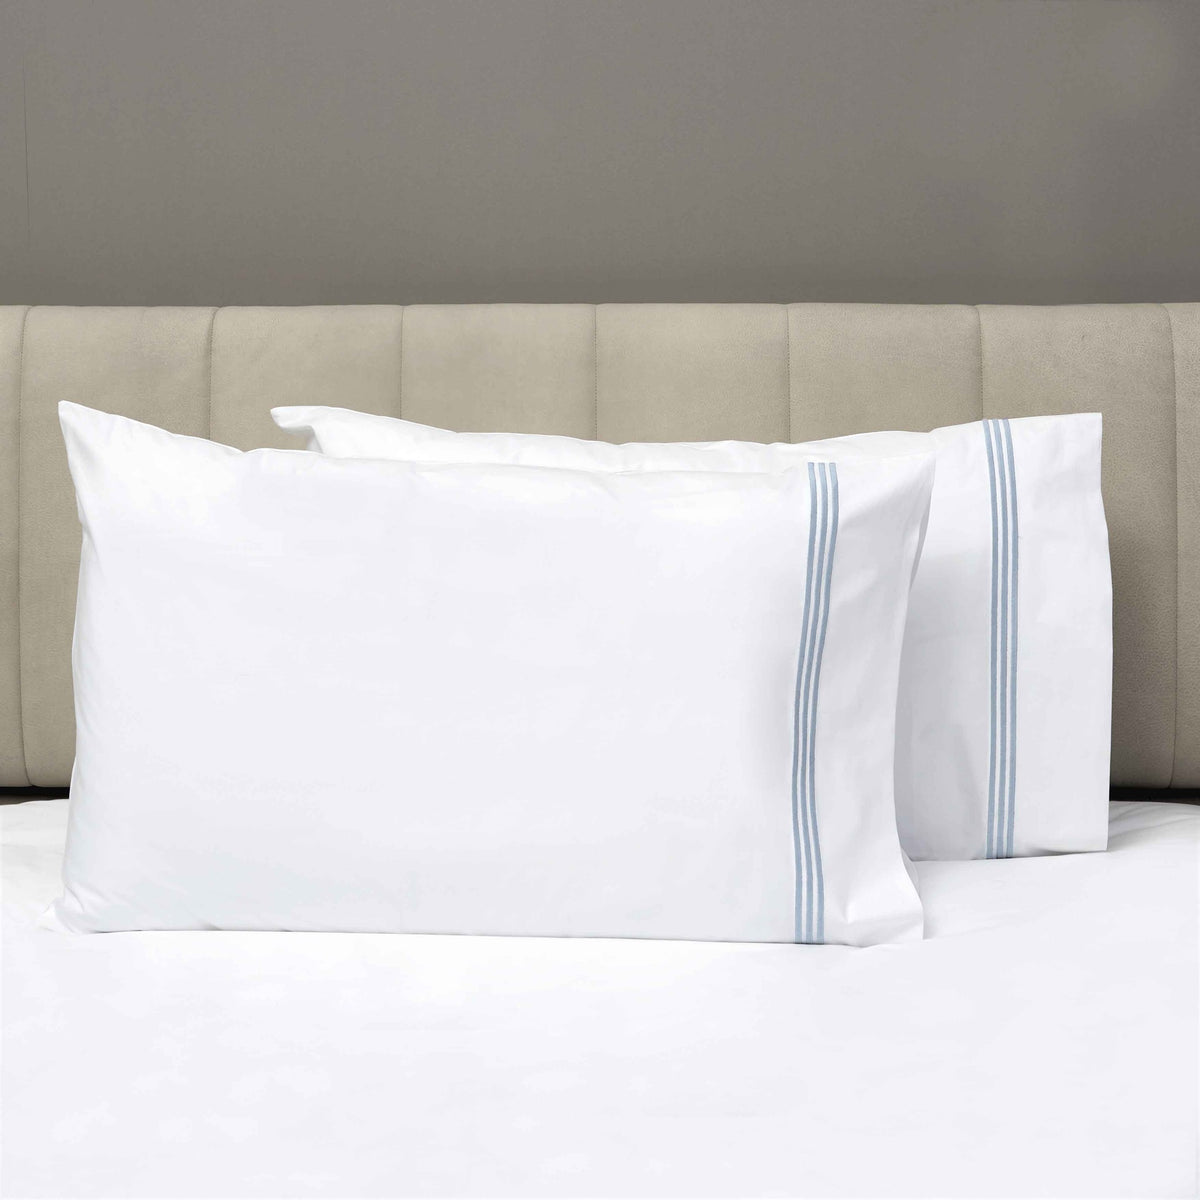 Pair of Pillowcases of Signoria Platinum Percale Bedding in White/Sky Blue  Color